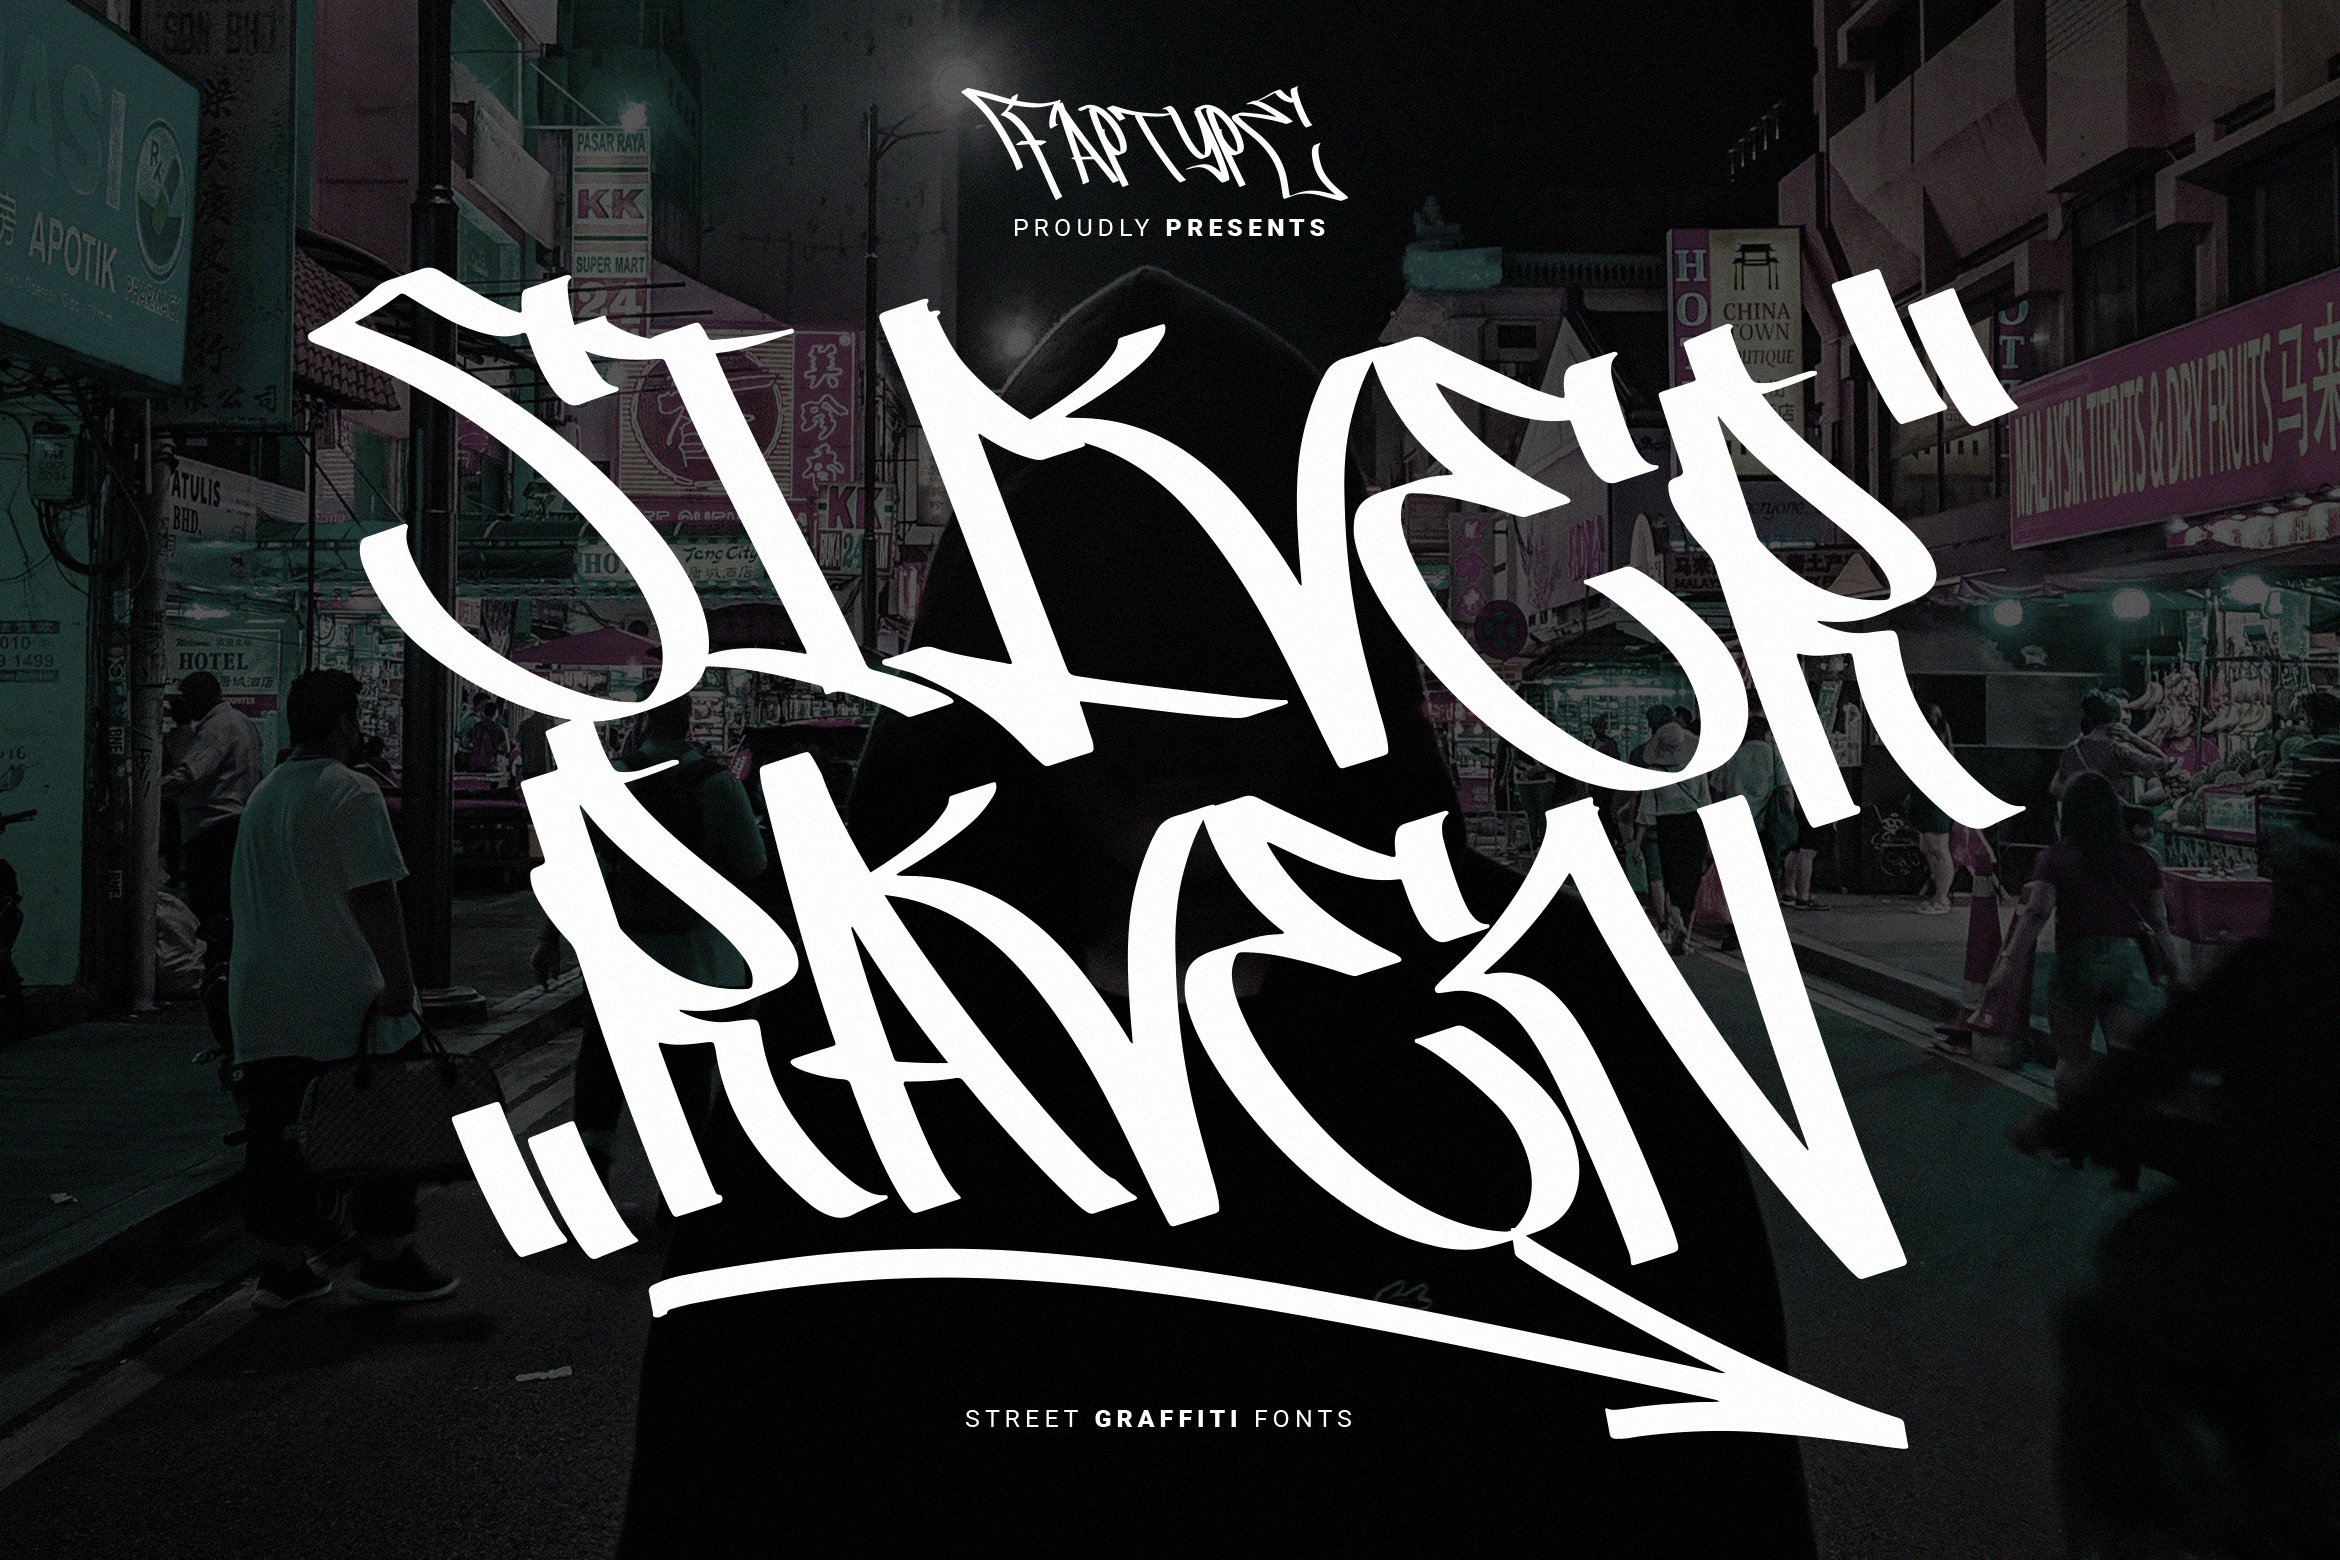 Silver Raven | Street Graffiti Font cover image.